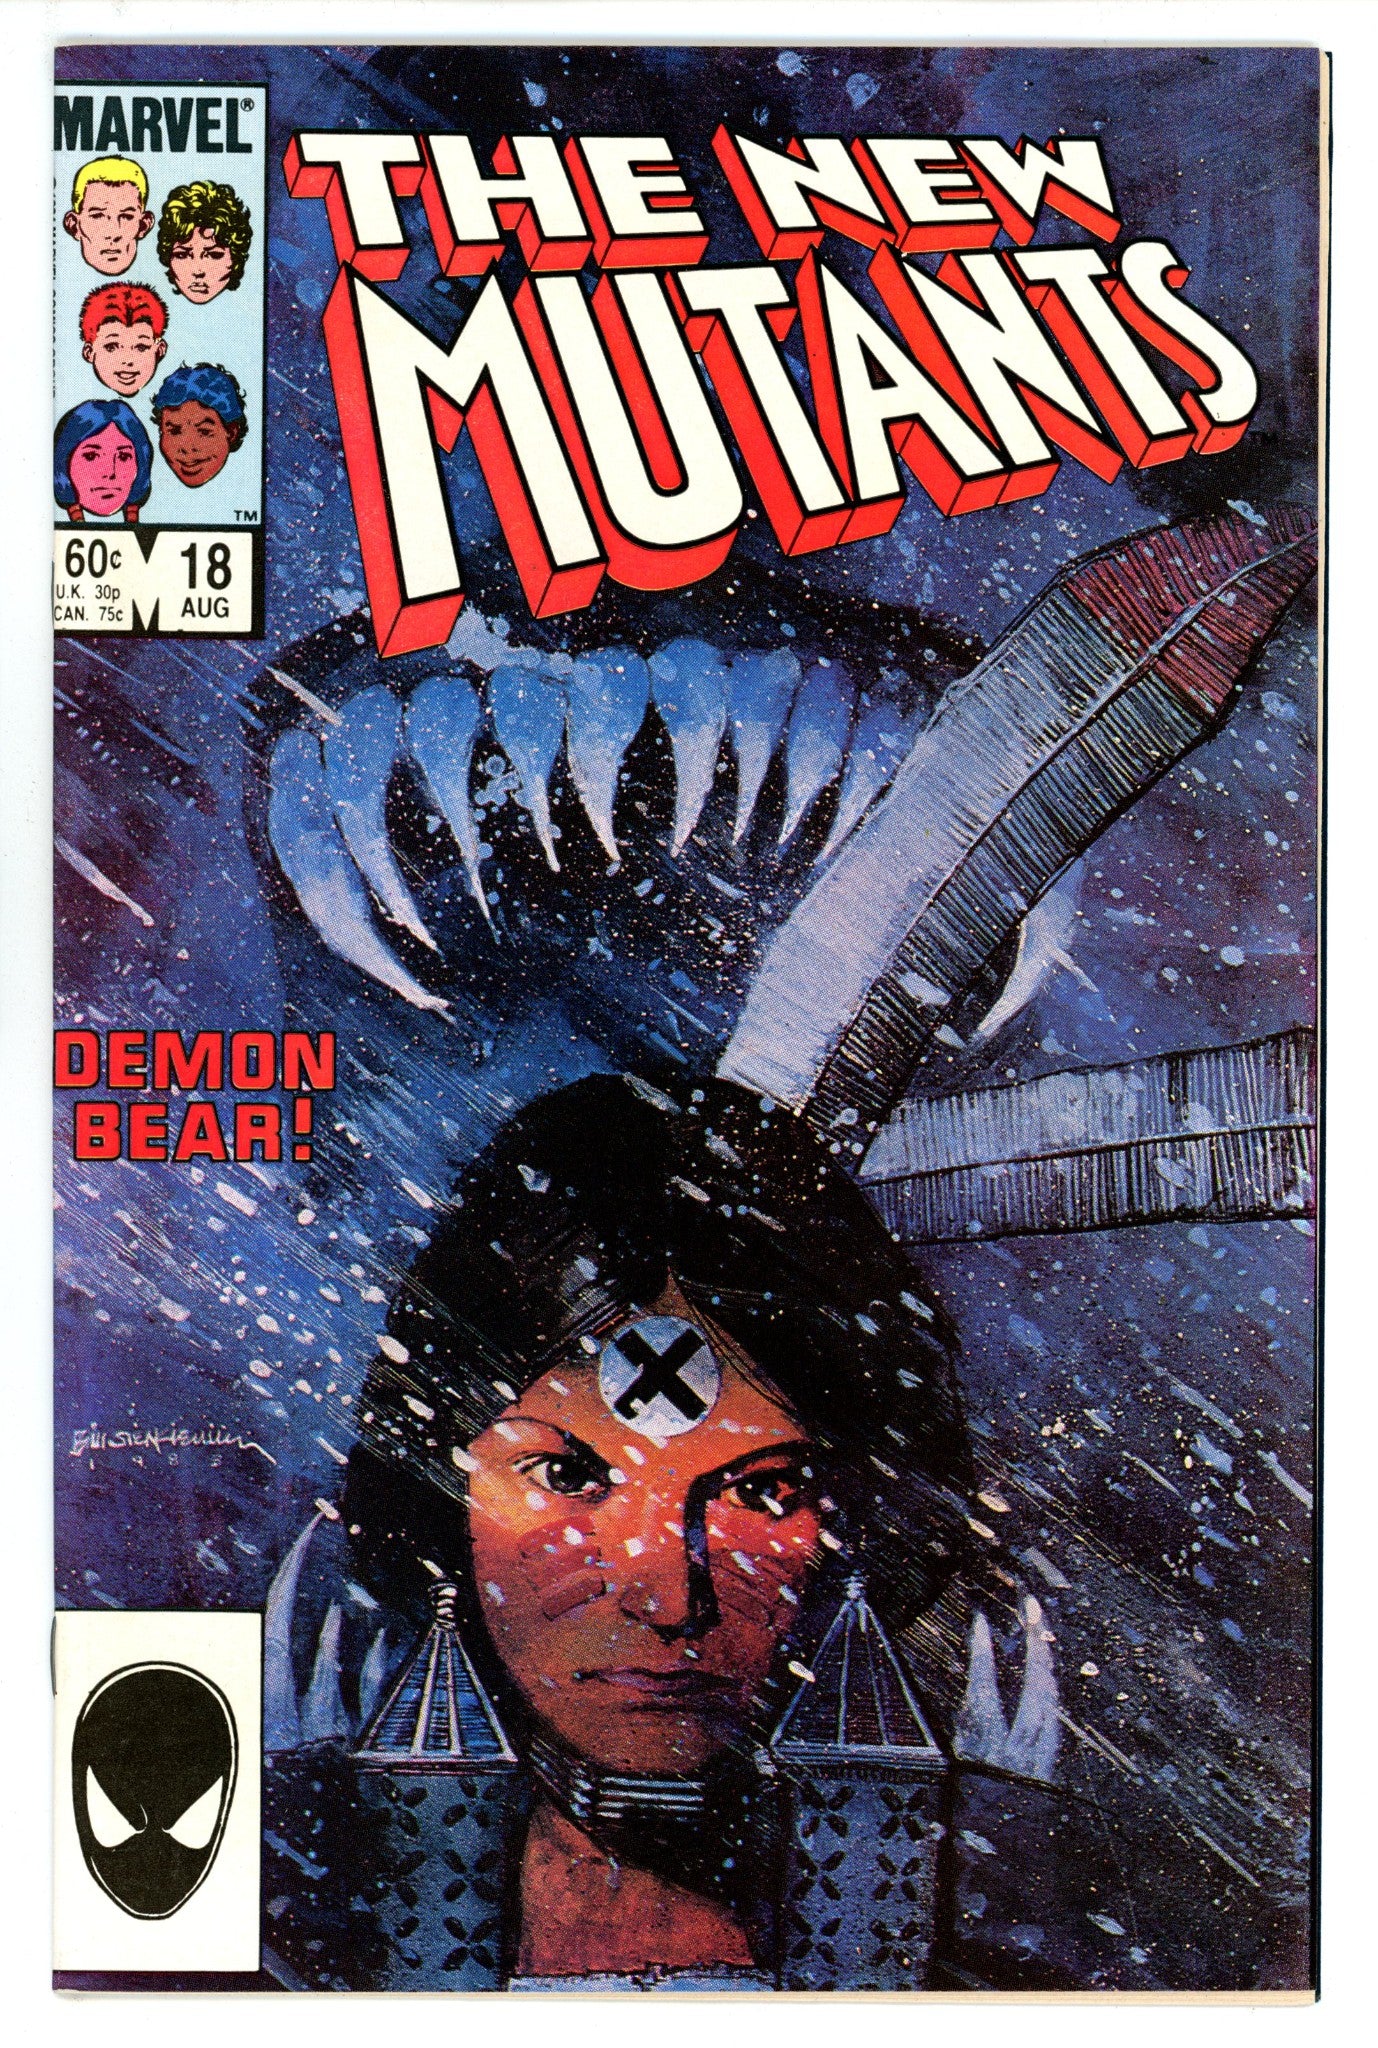 The New Mutants Vol 1 18 NM- (9.2) (1984) 